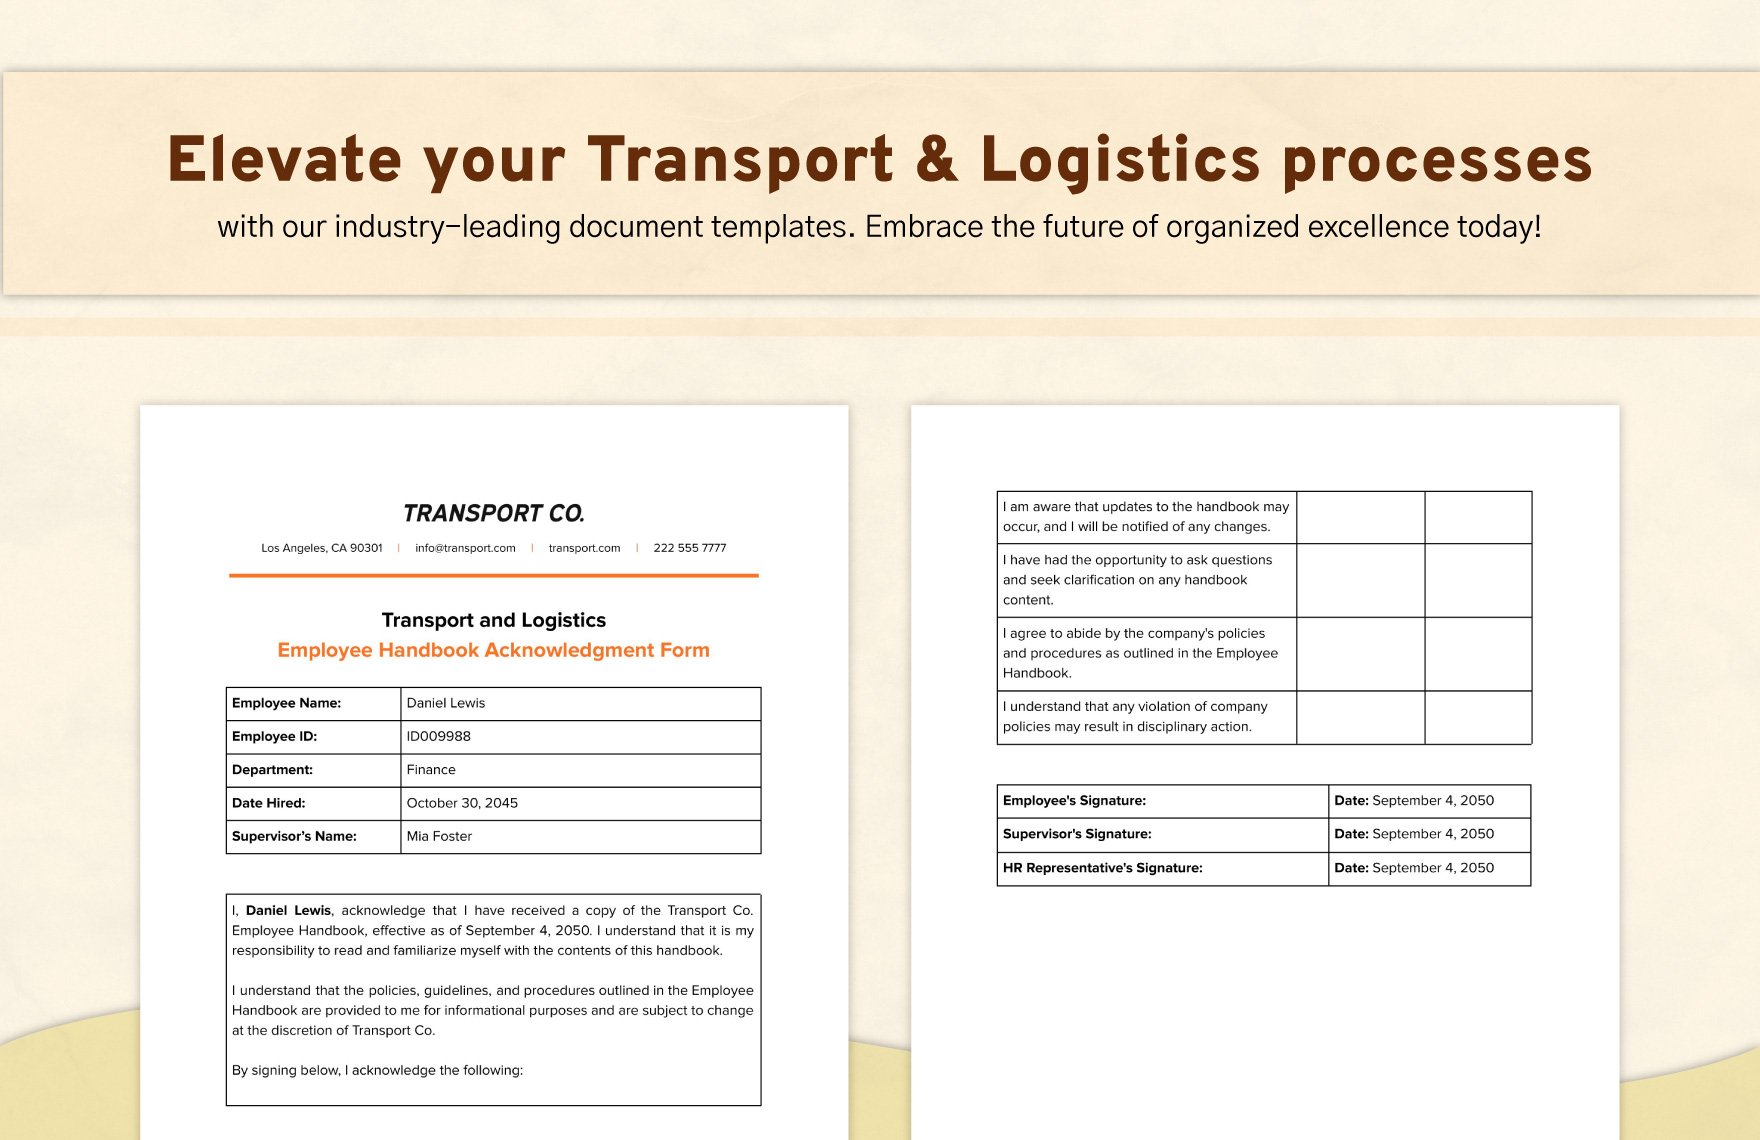 Transport and Logistics Employee Handbook Acknowledgment Form Template